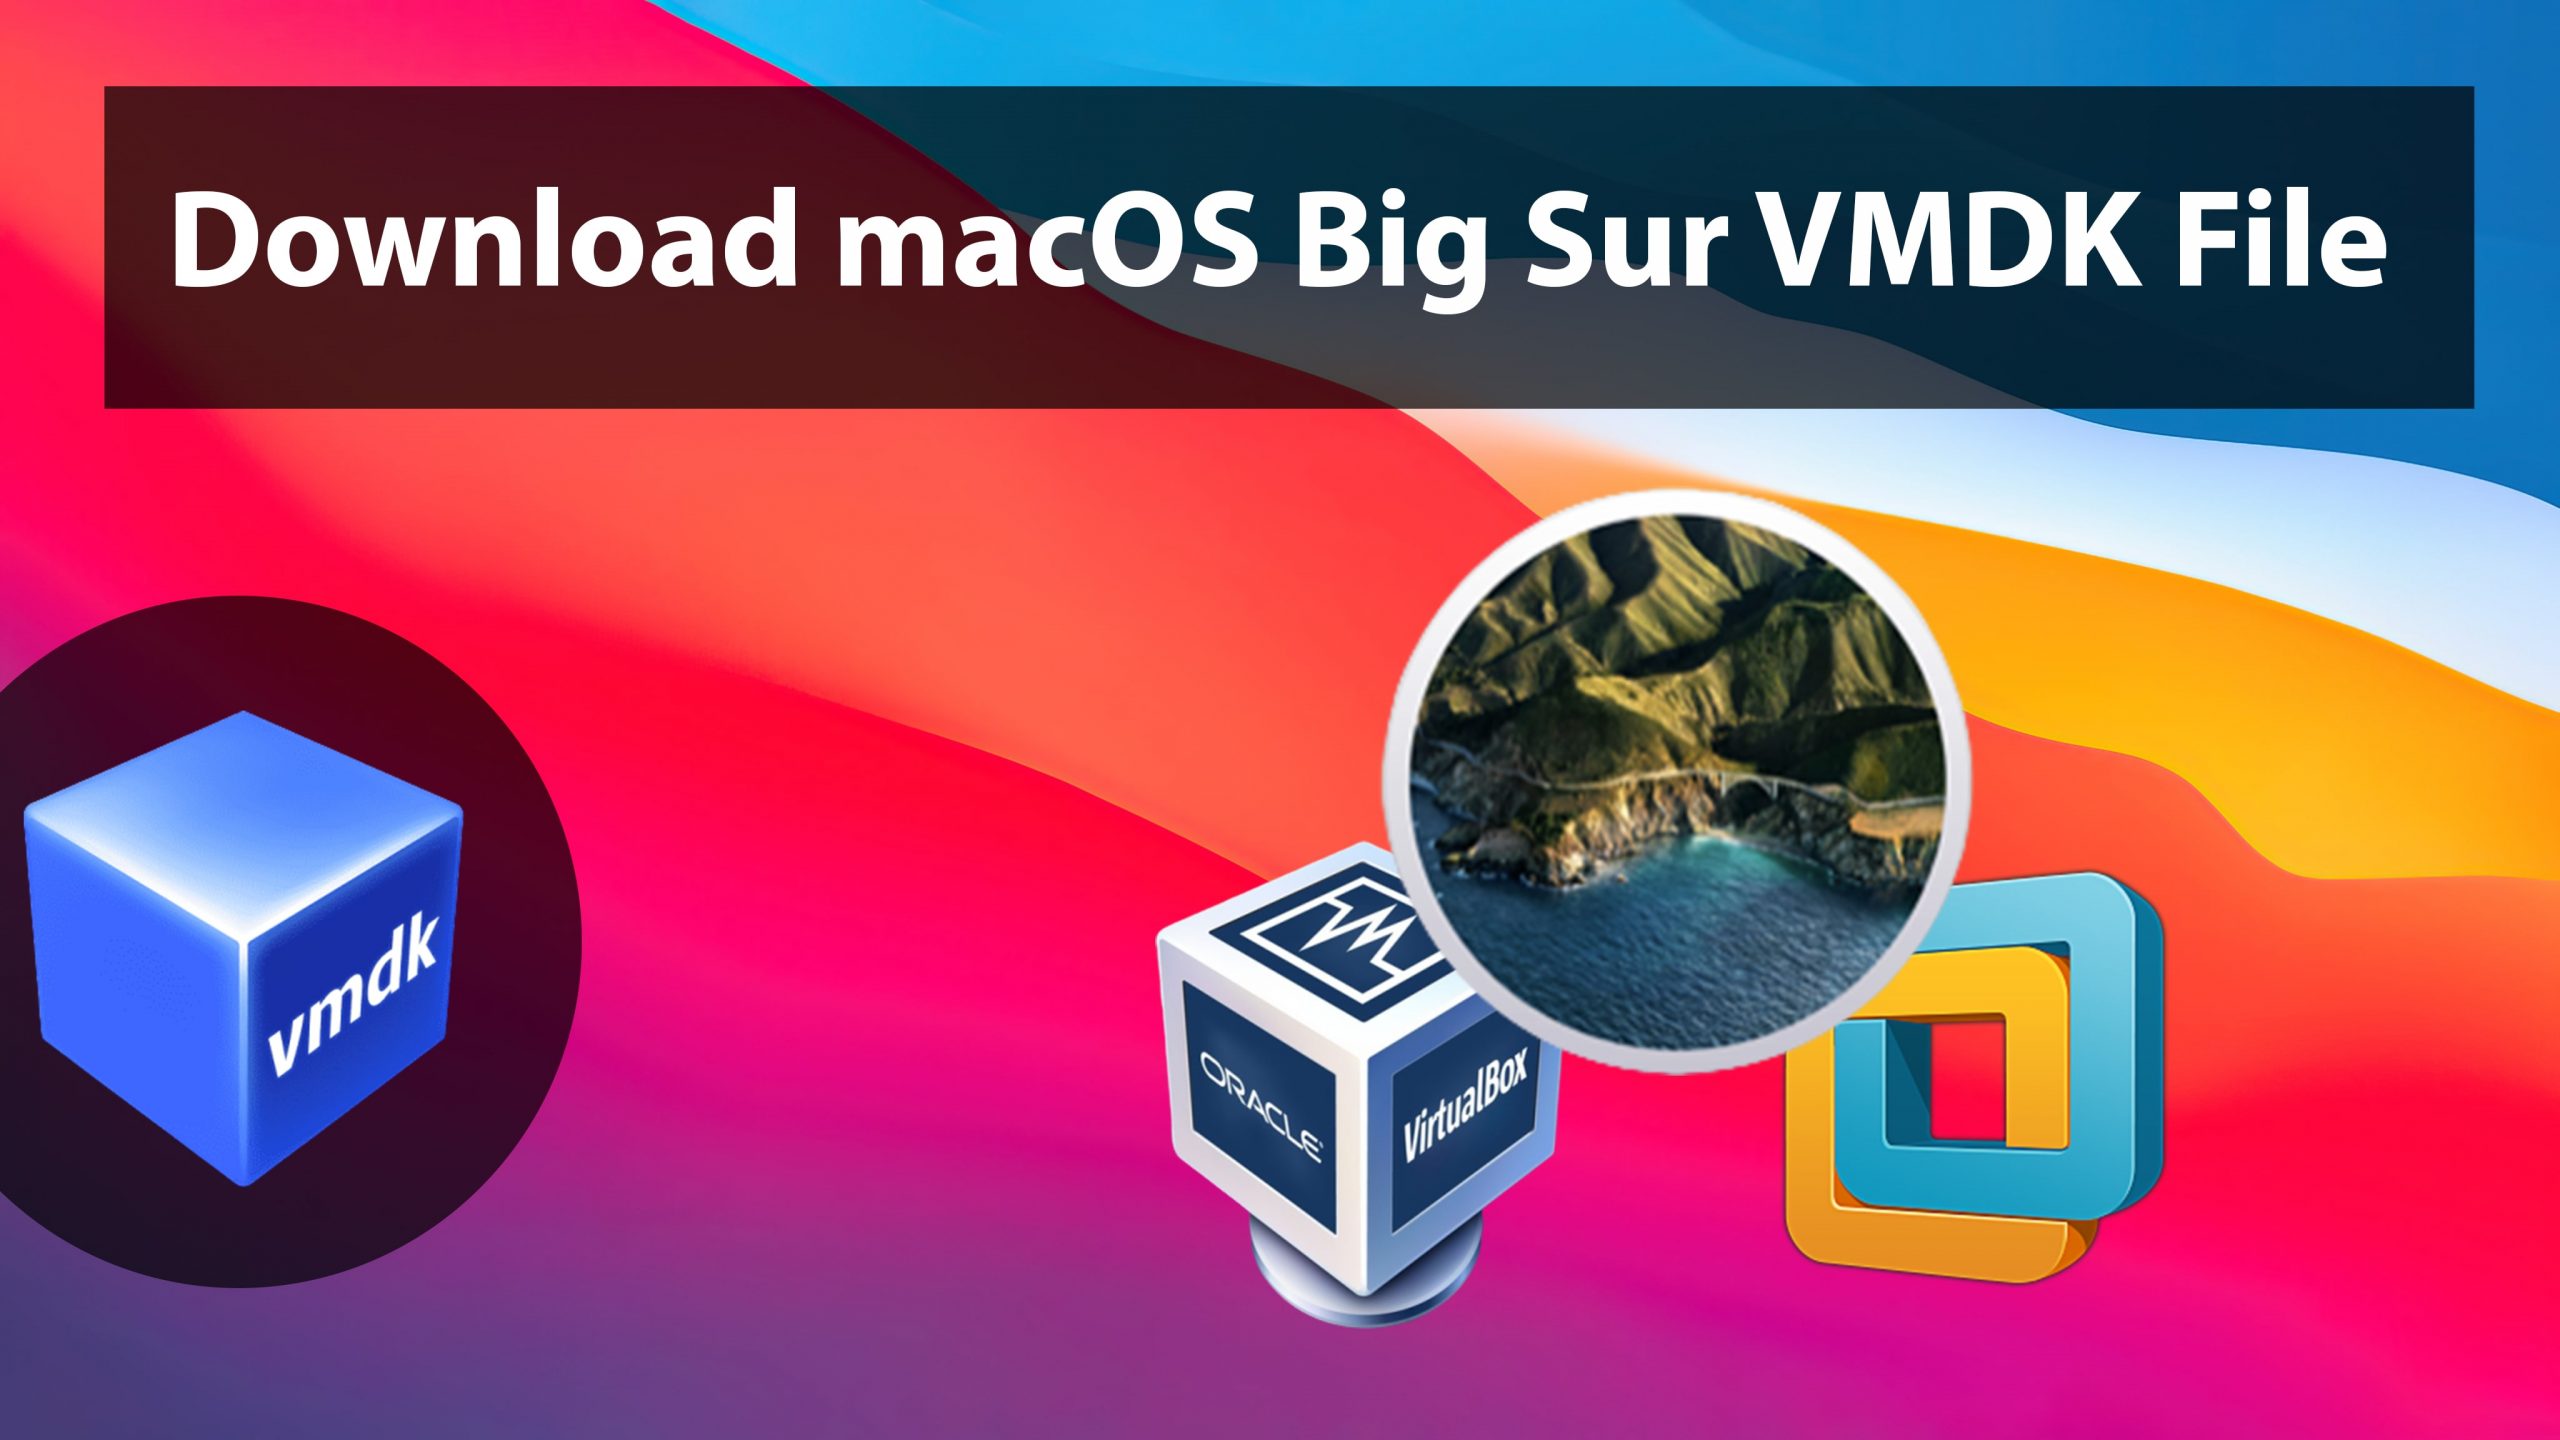 Download macOS Big Sur VMDK File